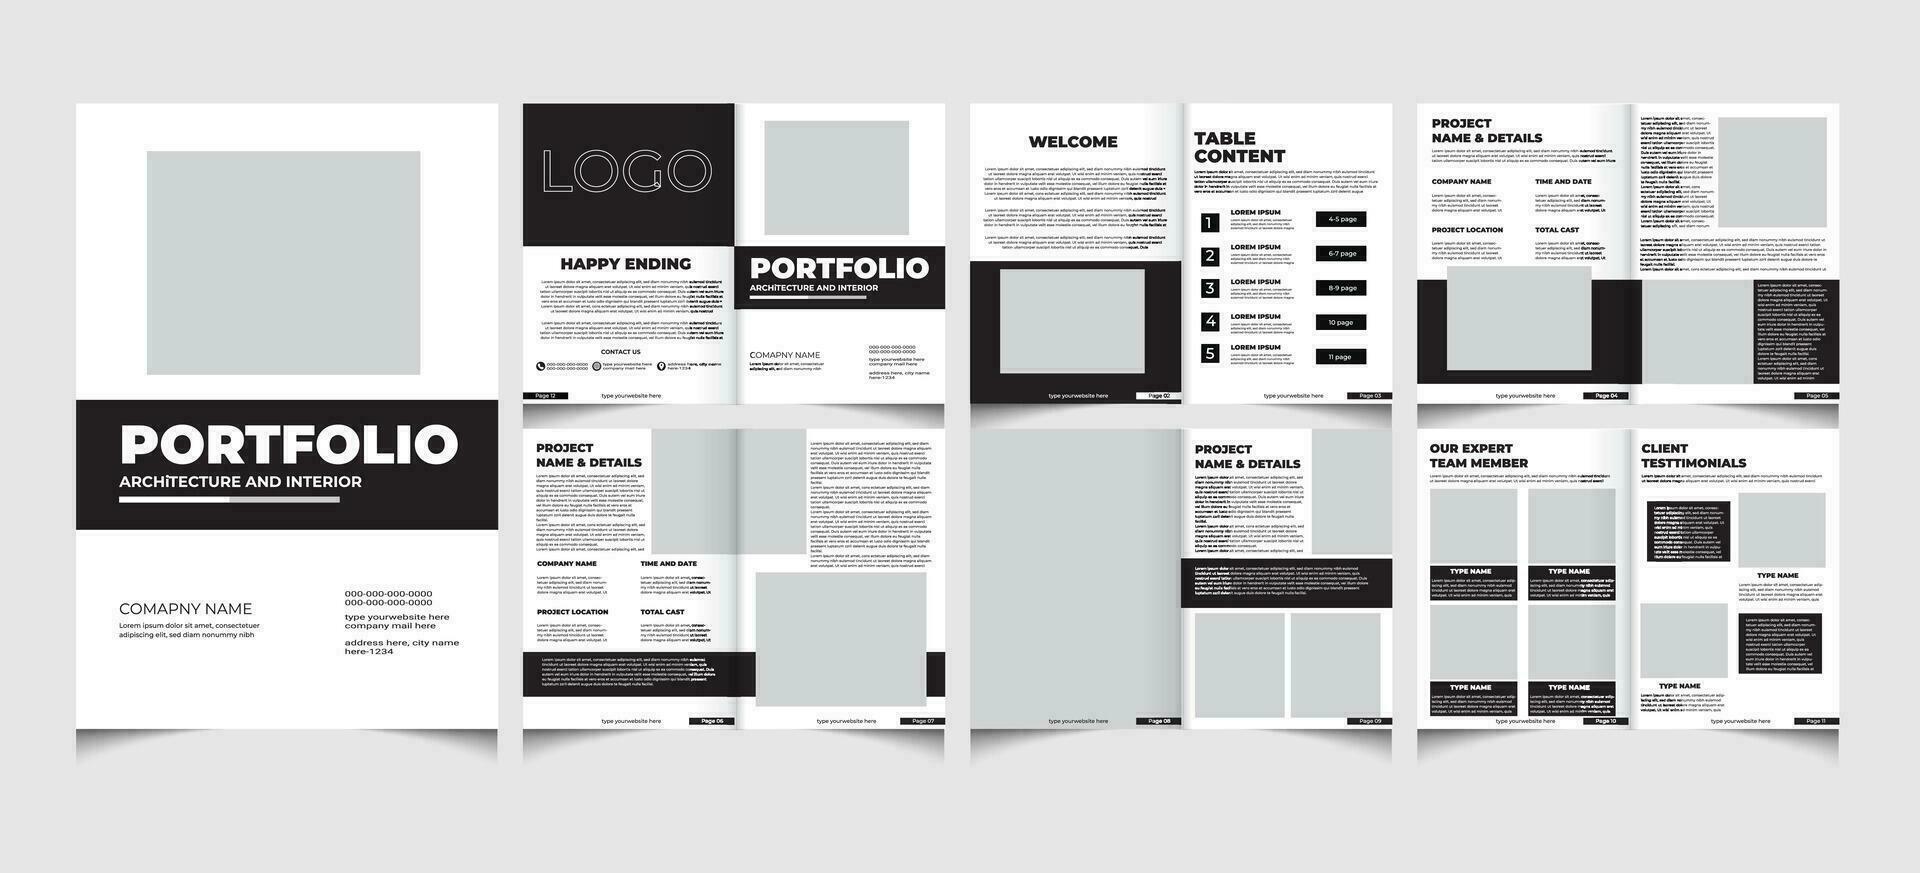 Architecture portfolio template or interior portfolio template design with a4 size. Portfolio template design. vector